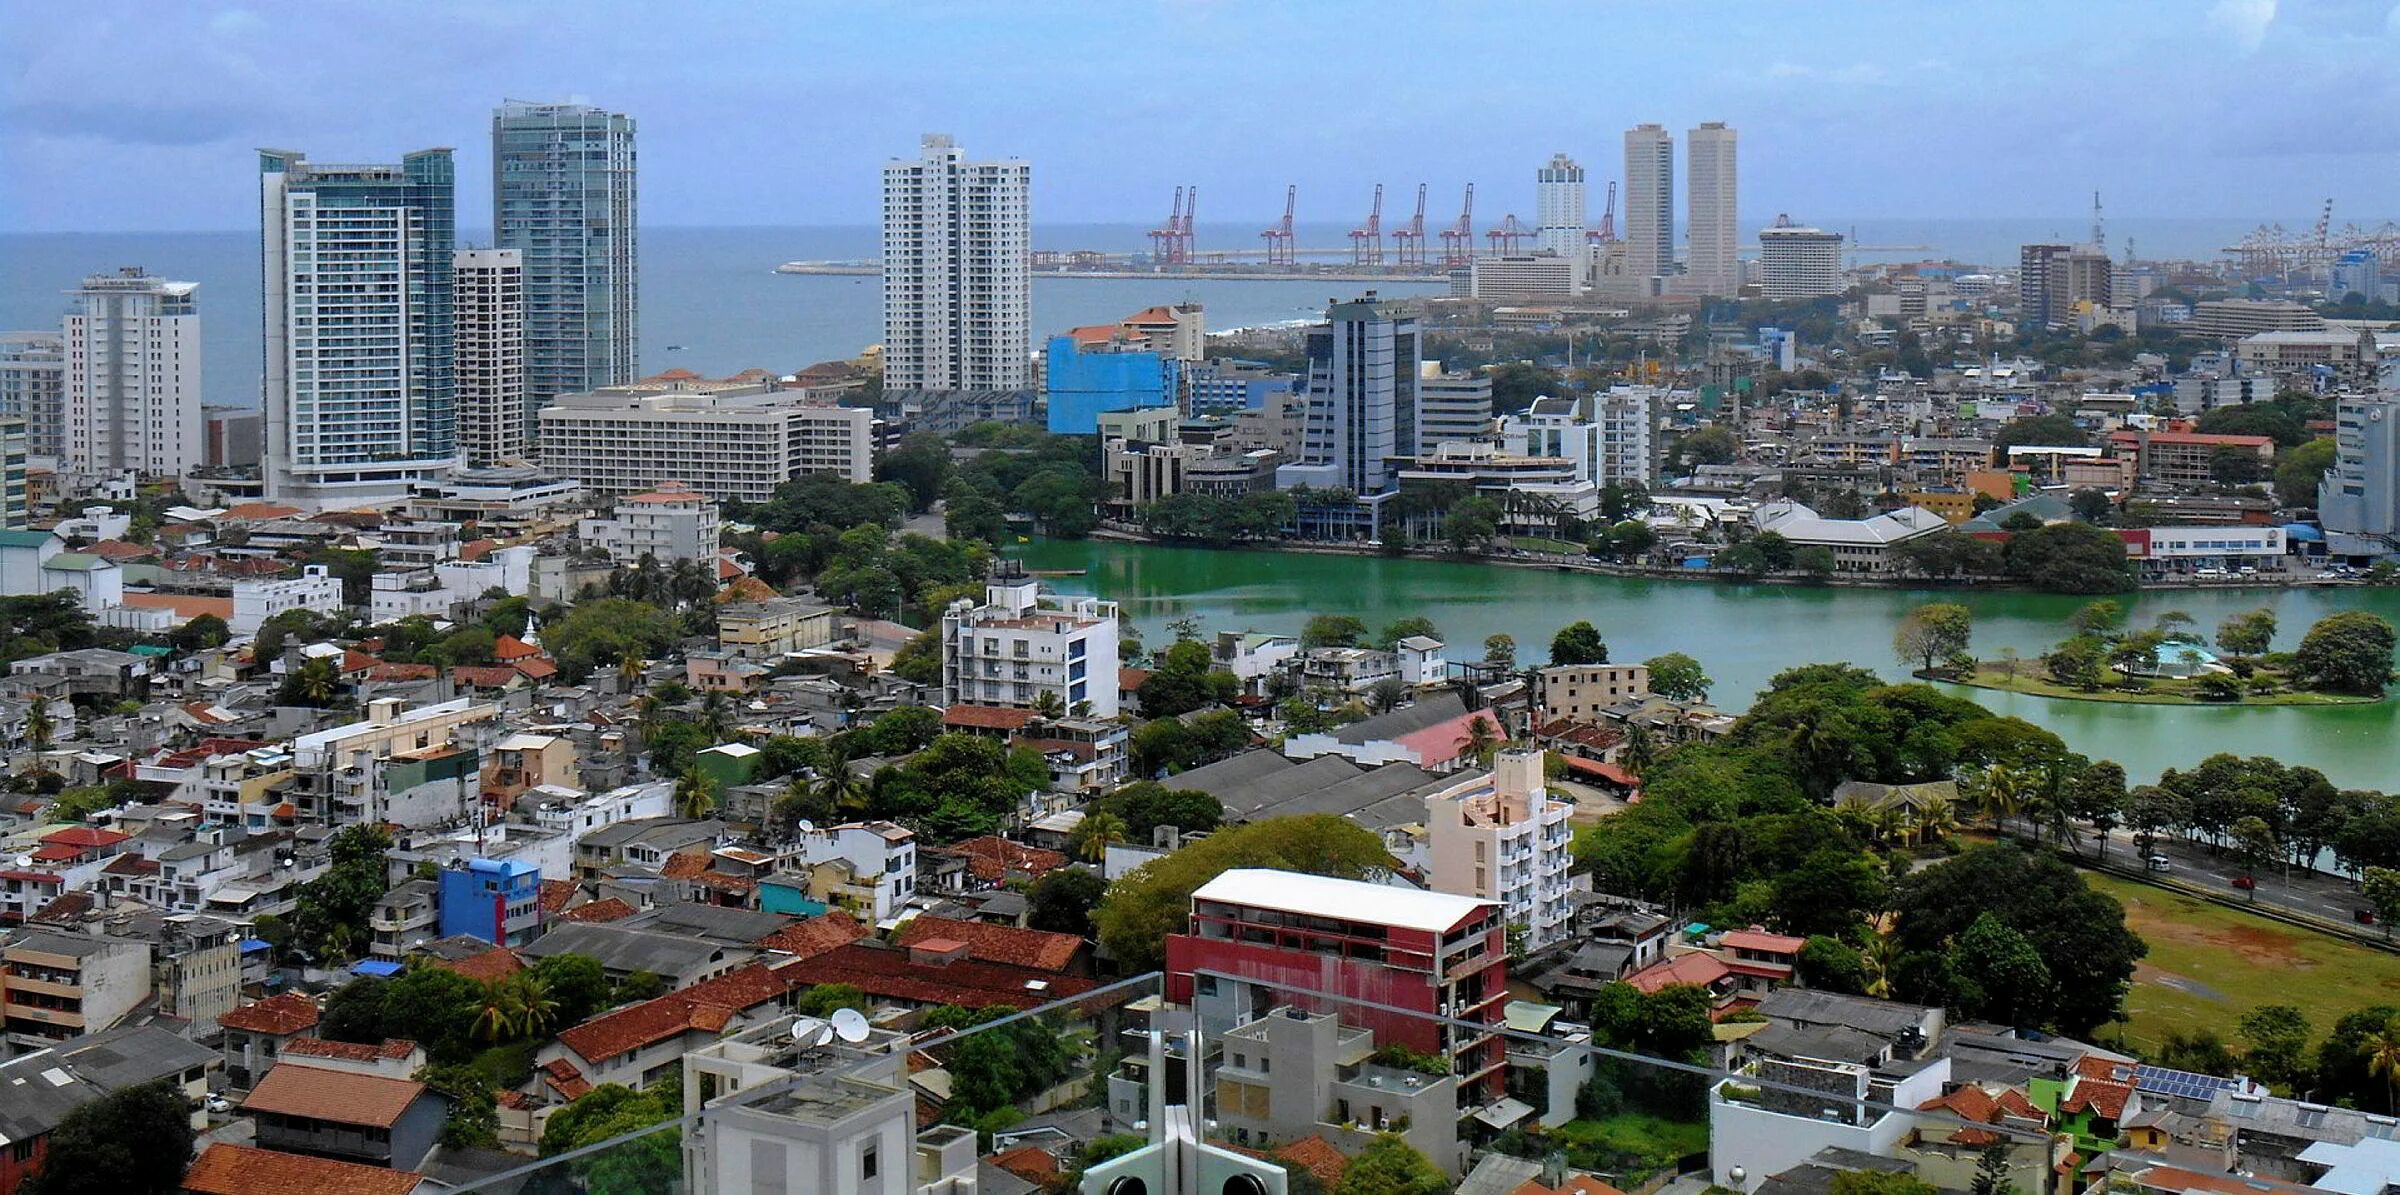 Шри-Джаяварденепура-котте столица. Коломбо Шри Ланка. Шри Ланка столица Коломбо. Морской порт Коломбо Шри Ланка.